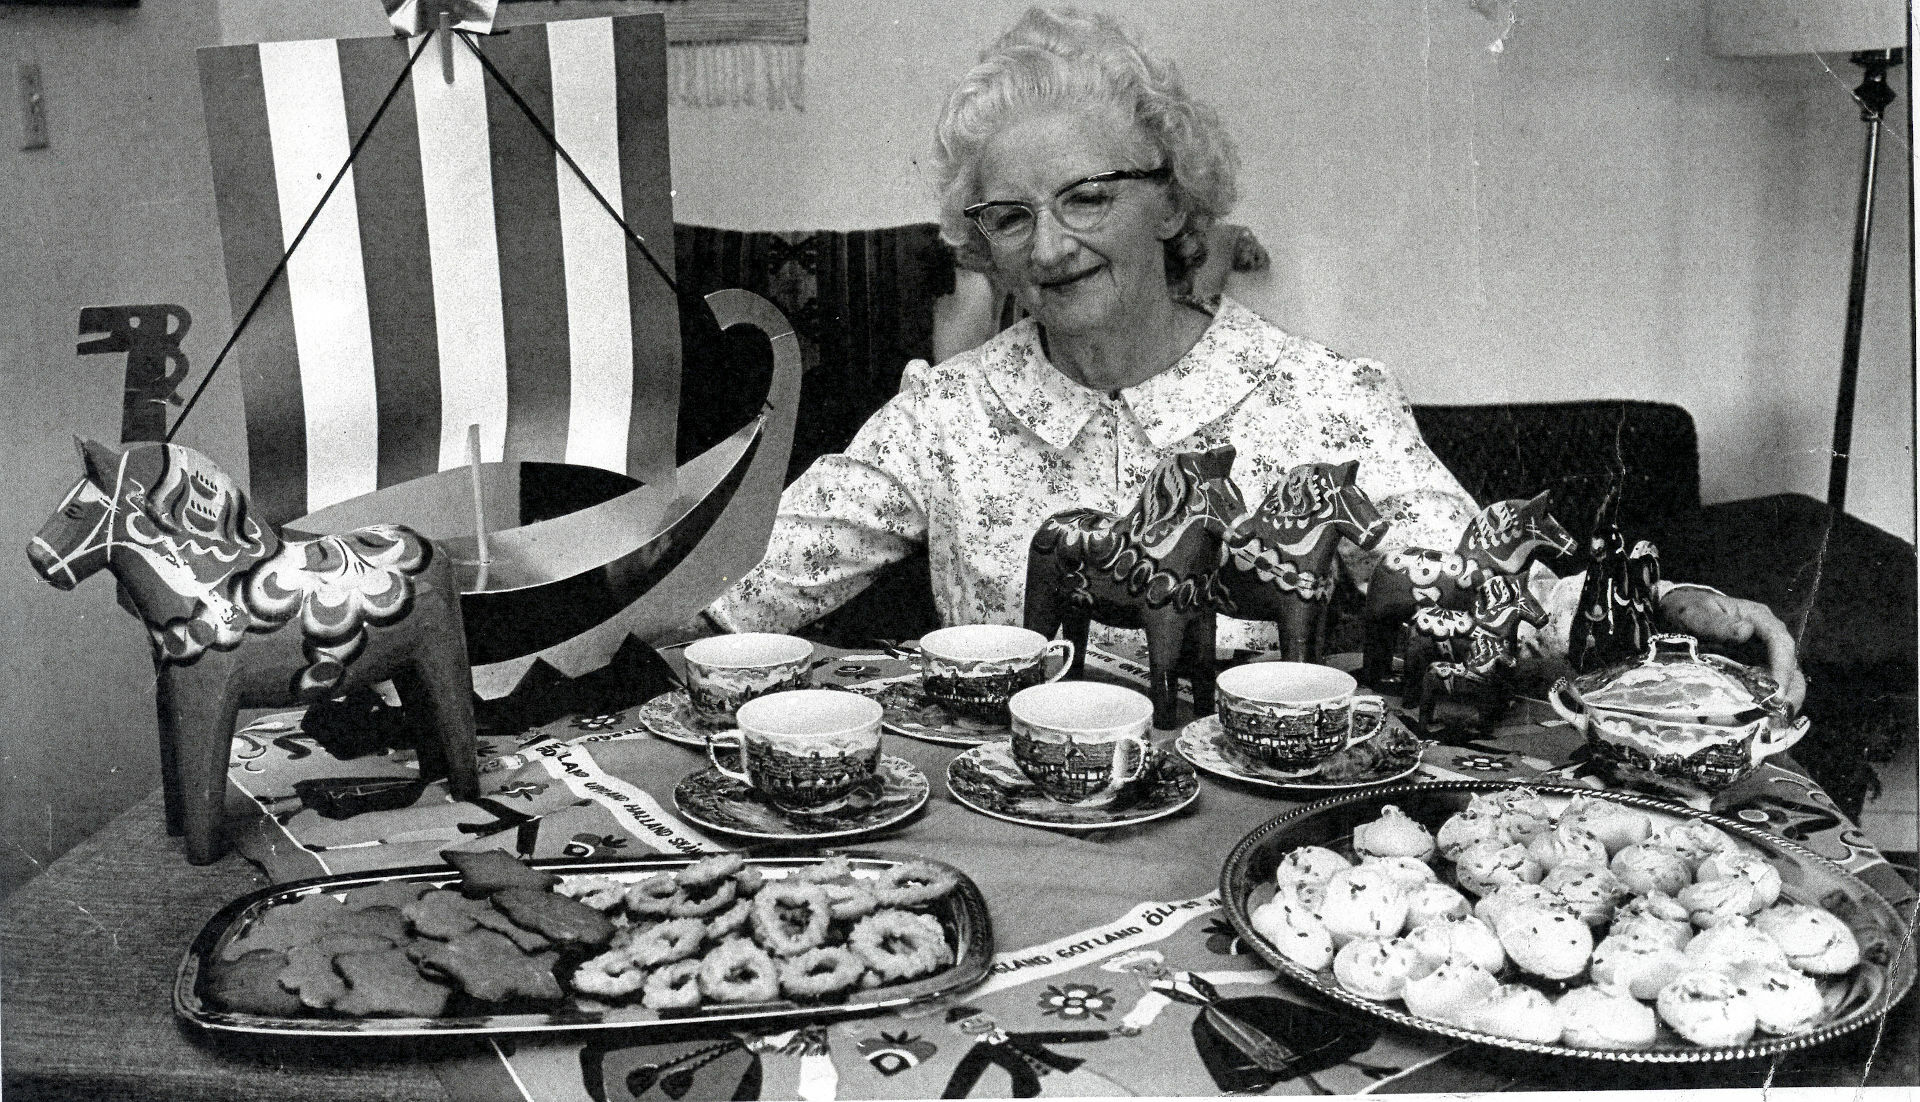 Mary Erickson Nastrom serving coffee, 1970.